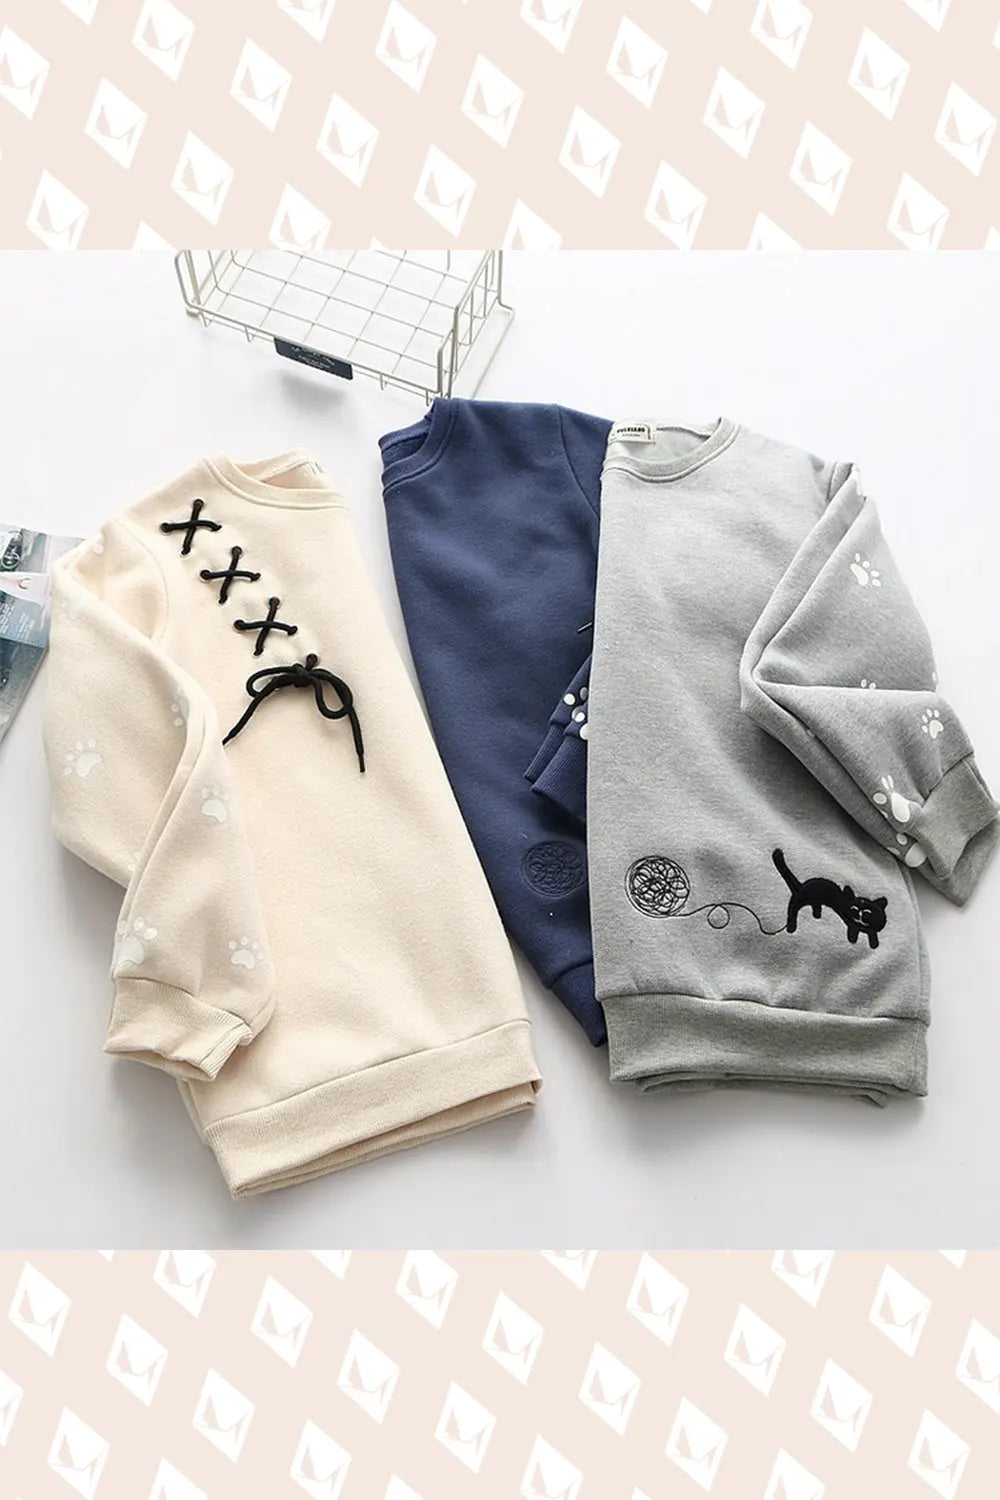 Embroidered Cat  Sweater - Navy Blue - Grey - Khaki - Strange Clothes